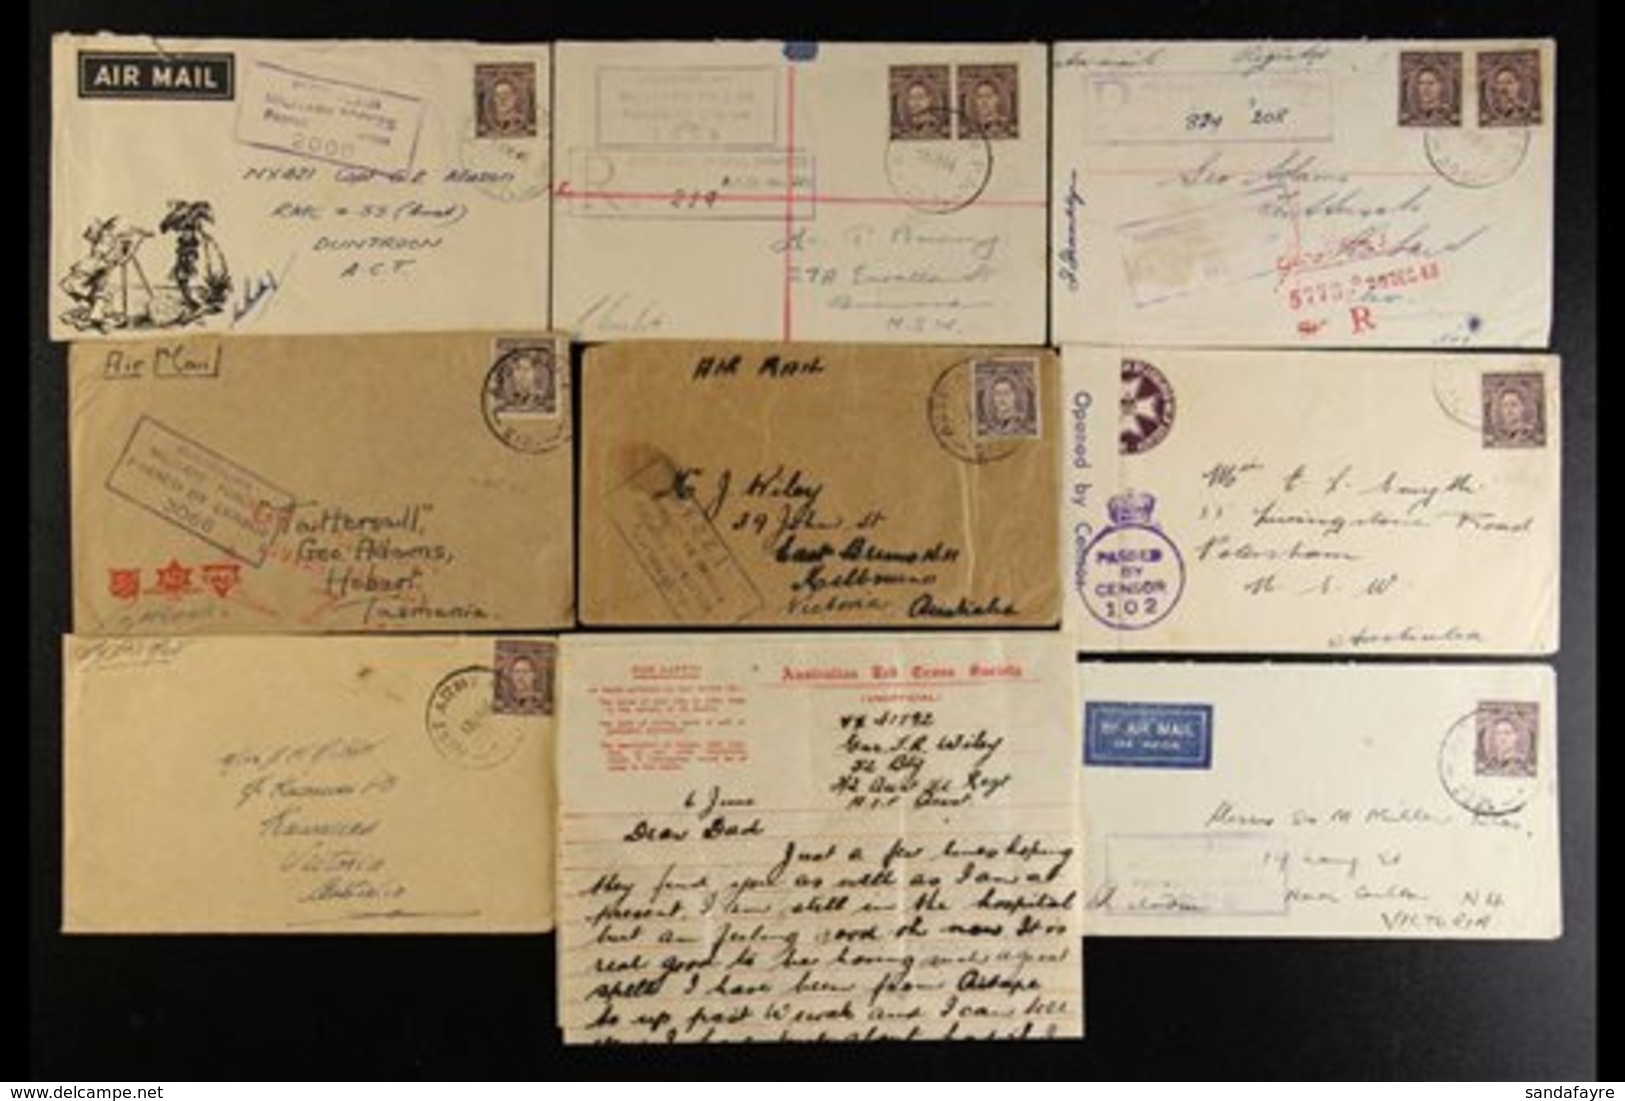 WORLD WAR II - AUSTRALIAN ARMY COVERS Fine Collection Of Covers To Australia, Bearing Australia KGVI Stamps Tied By Clea - Papúa Nueva Guinea